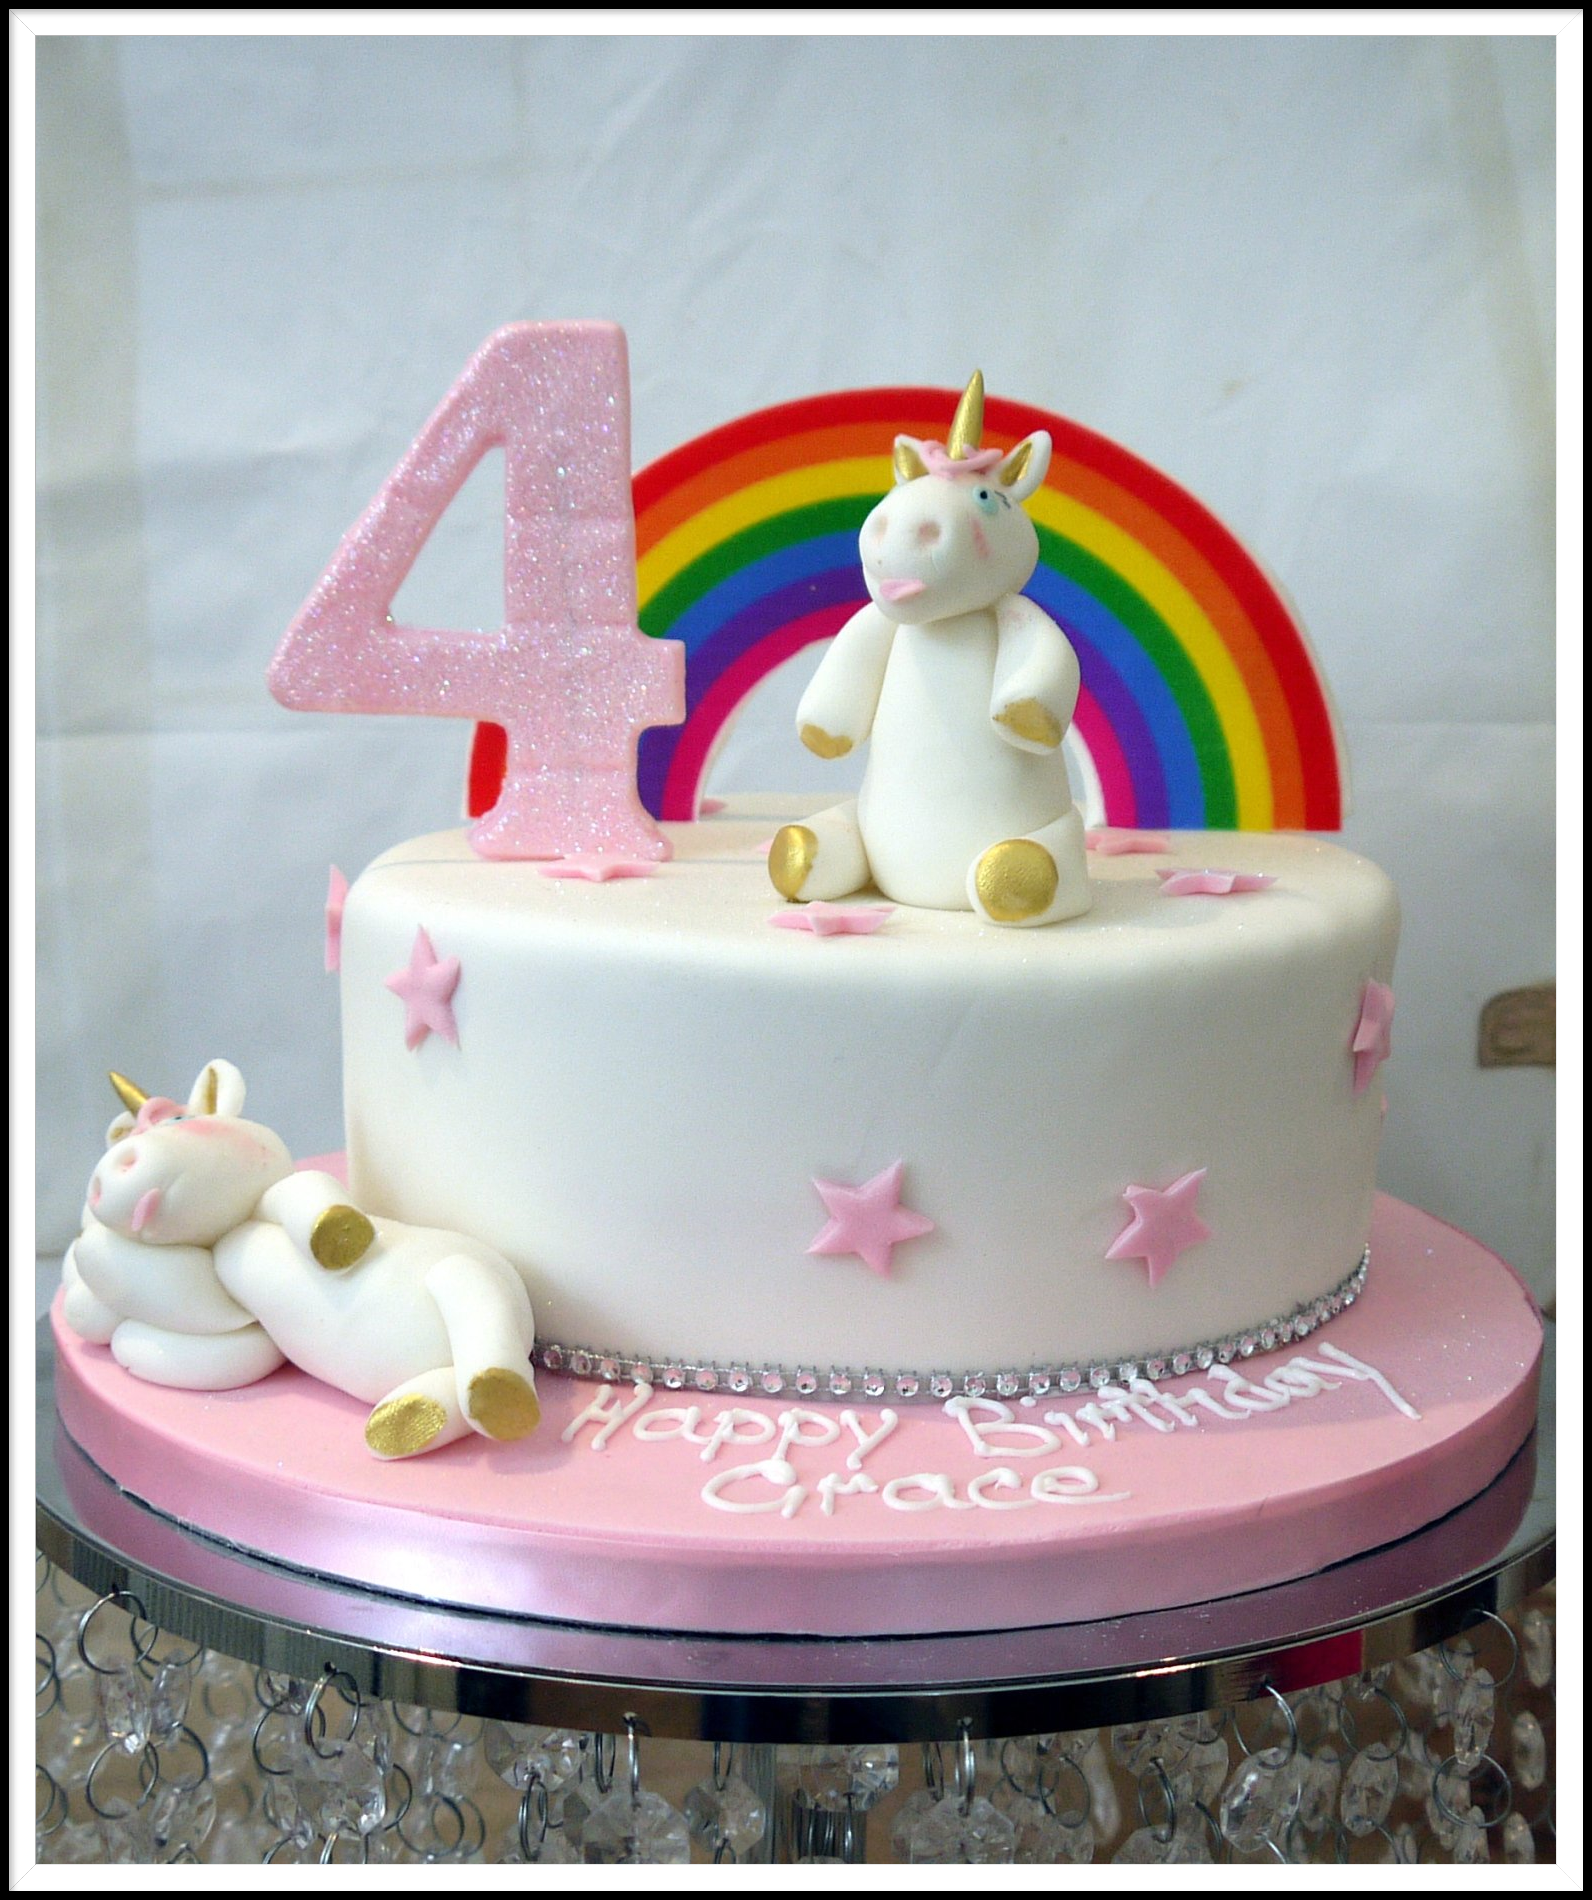 Unicorn and rainbow cake